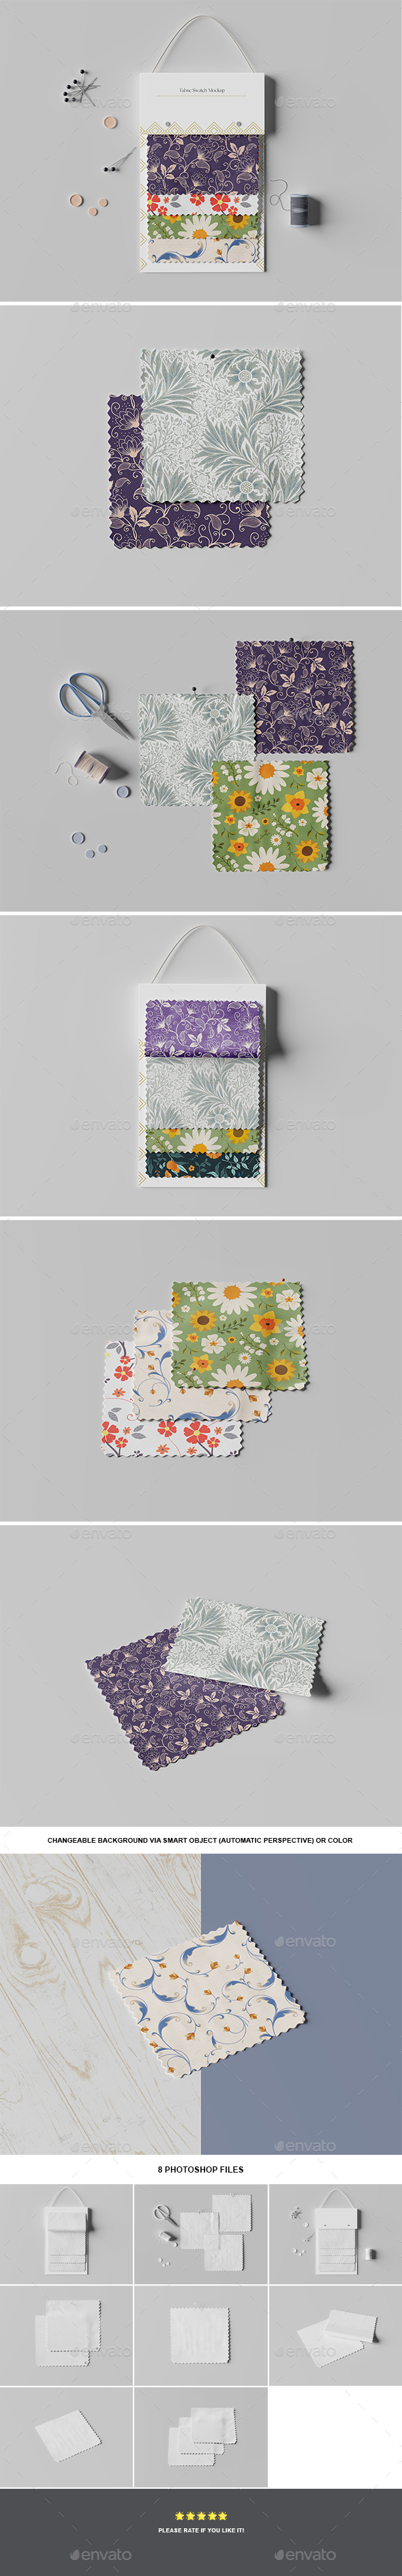 Fabric Swatch card Mockup